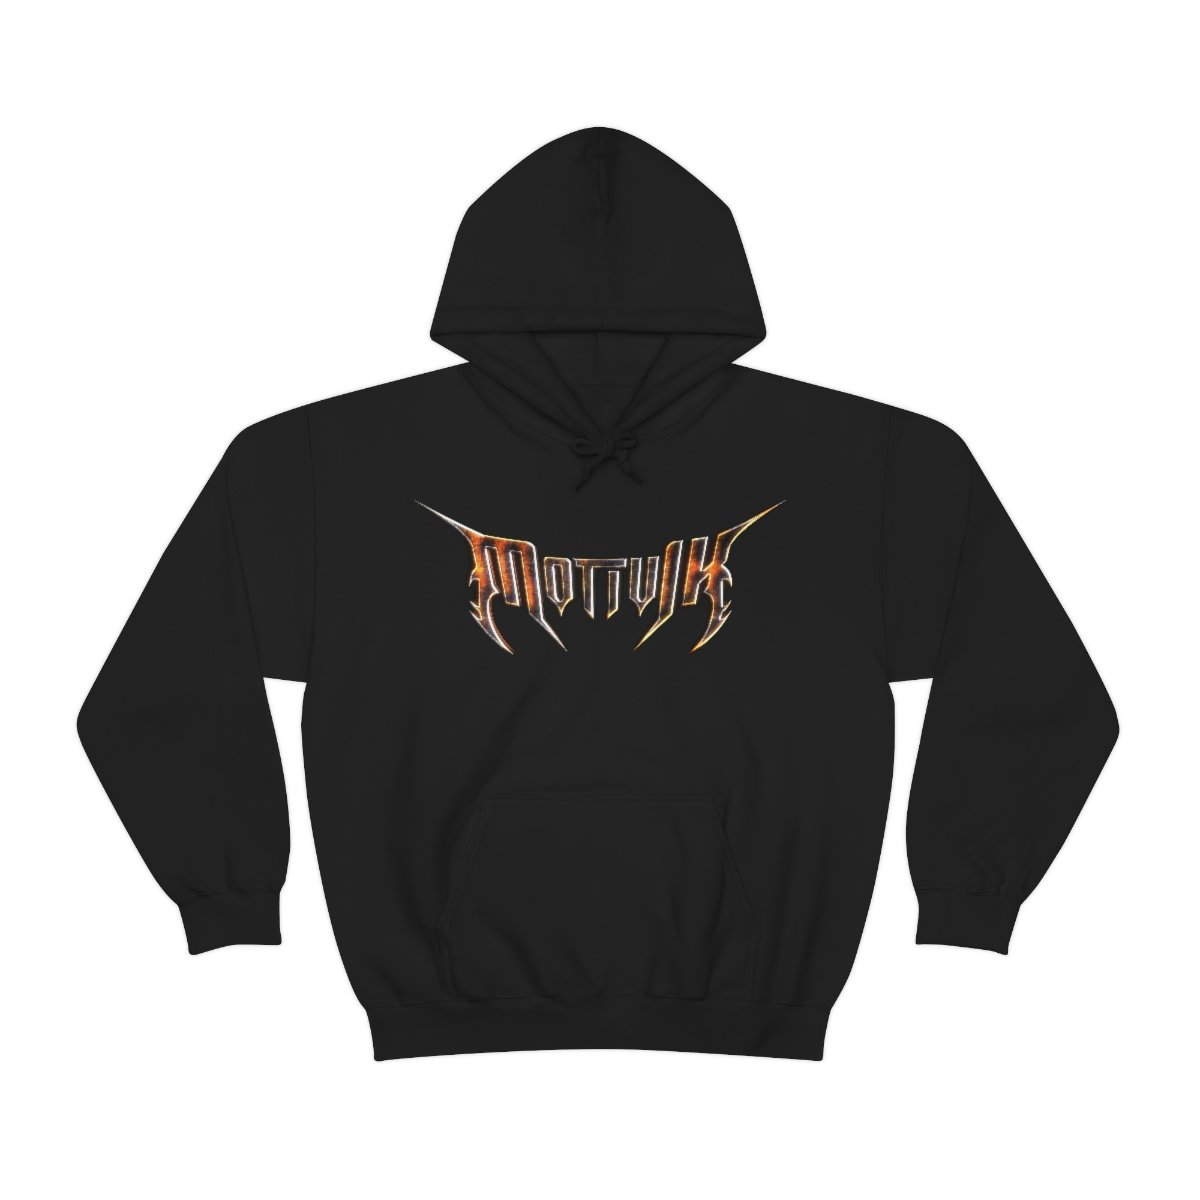 Motivik Forged Metal Logo Pullover Hooded Sweatshirt